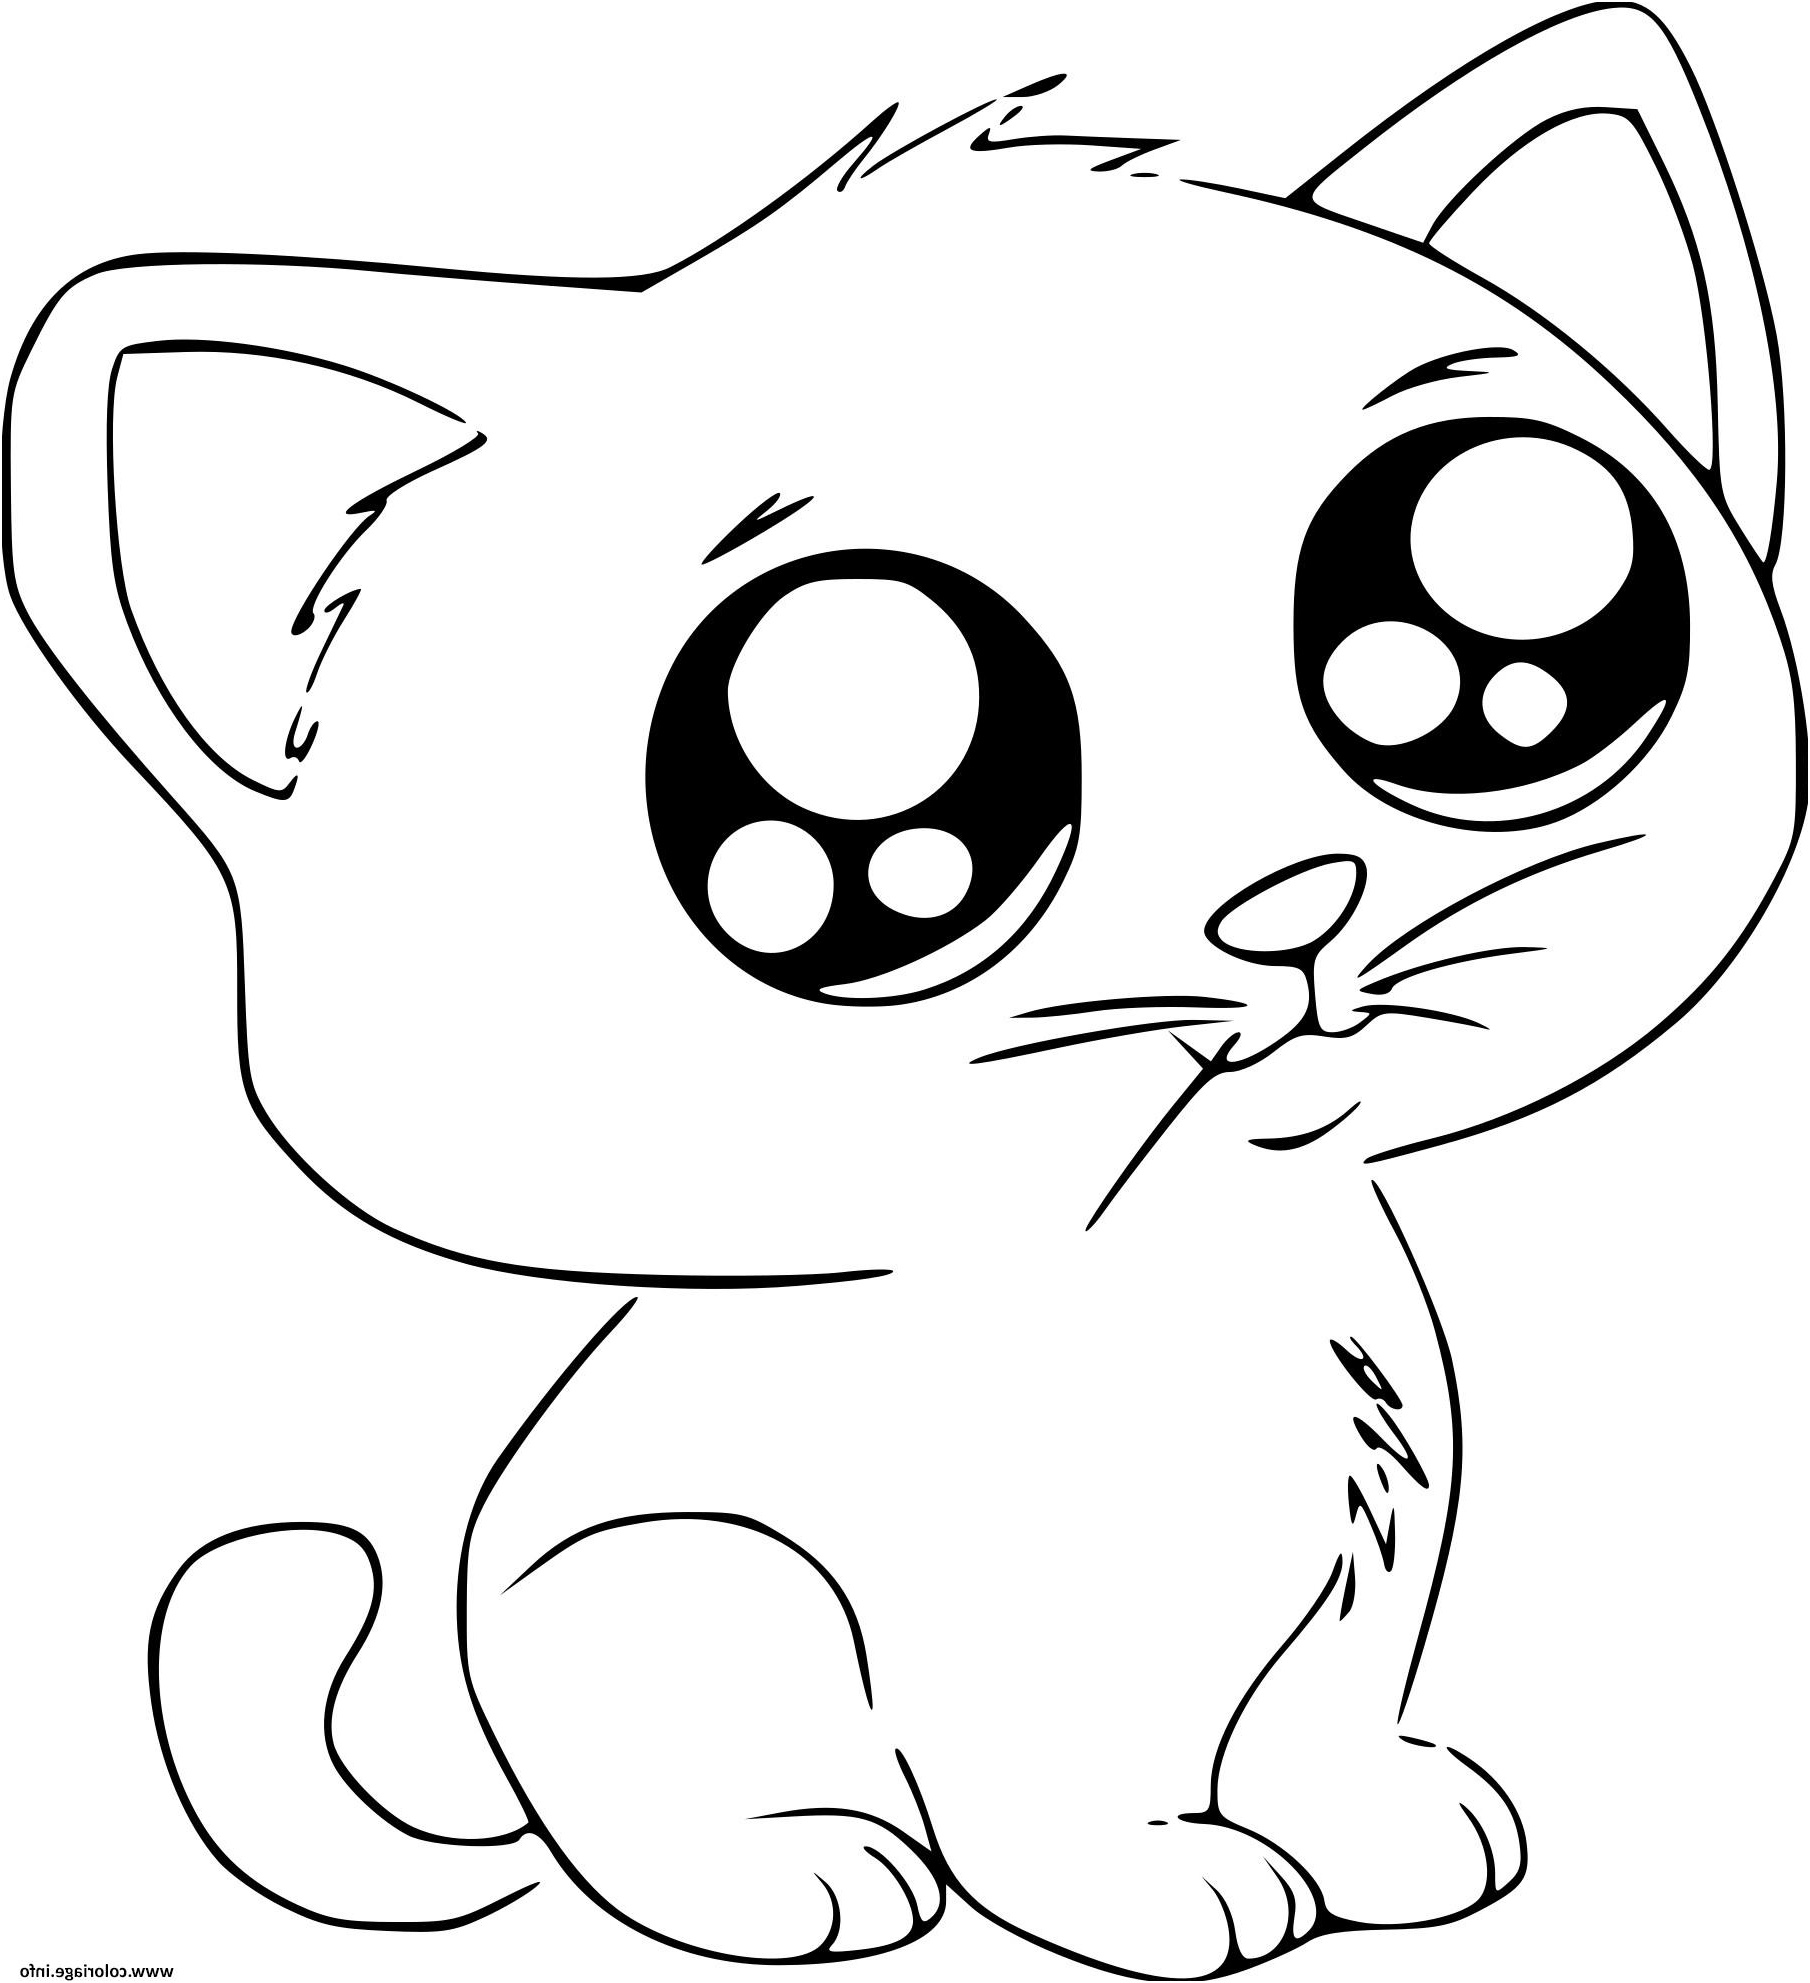 dessin chat kawaii cute coloriage dessin